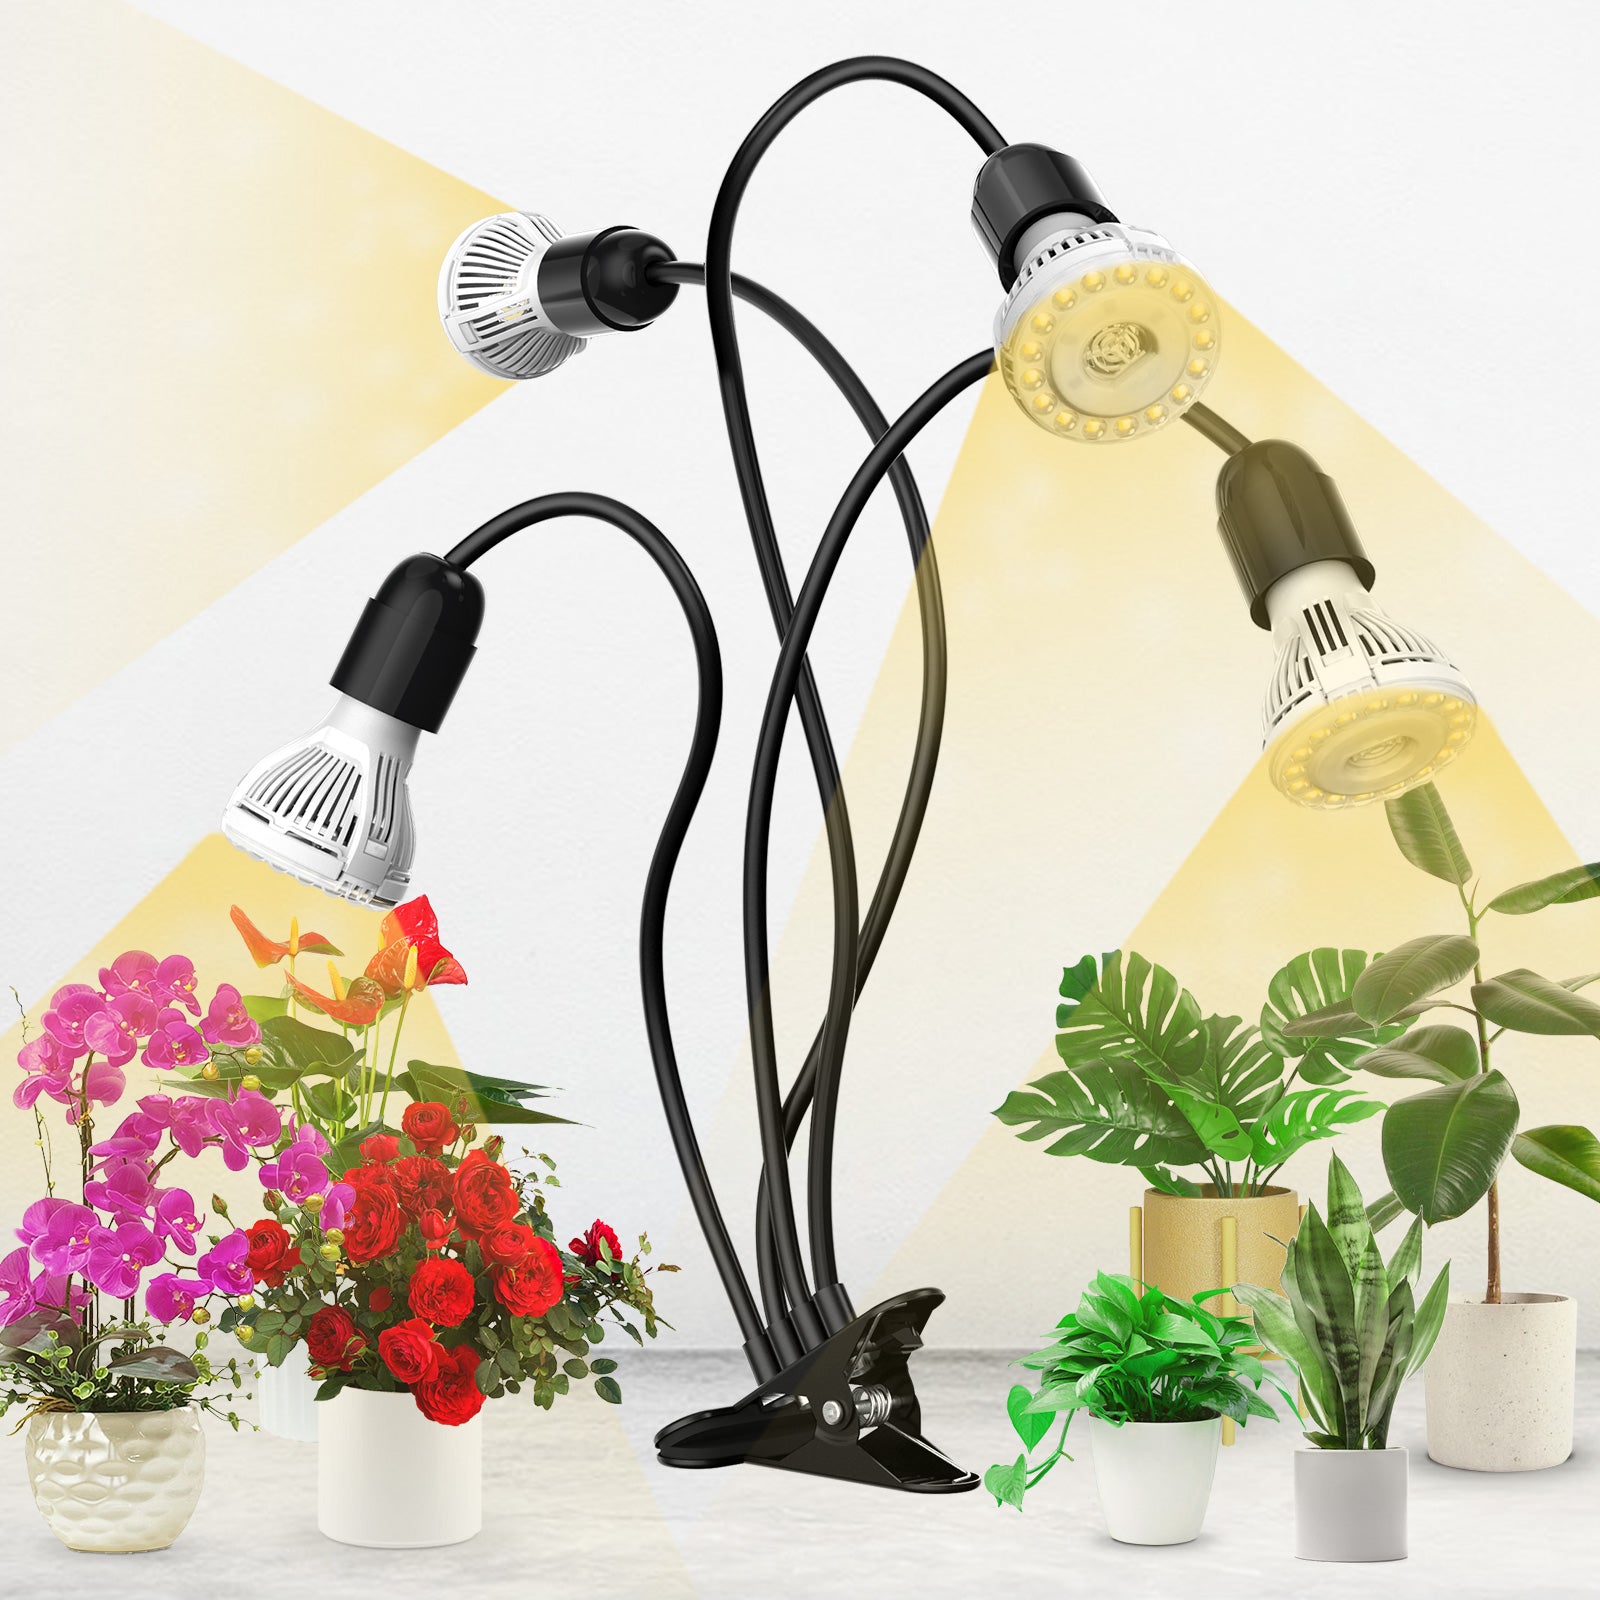 Pot Clip LED Grow Light(US/CA ONLY)